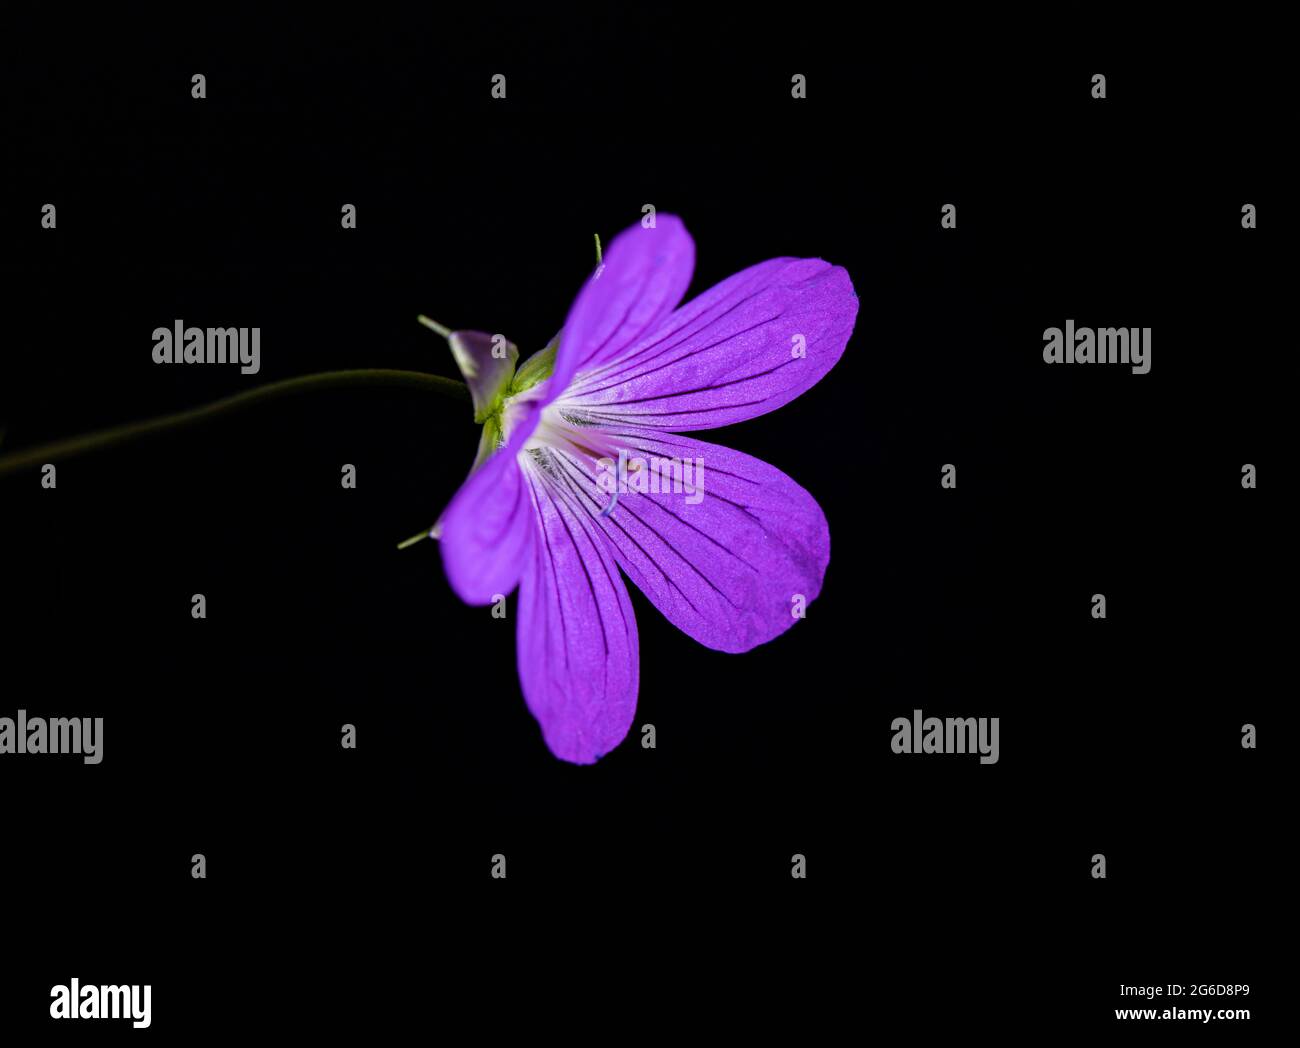 Geranio salvaje, geranio maculatum, flor violeta sobre fondo negro, fotografía de vida fija Foto de stock